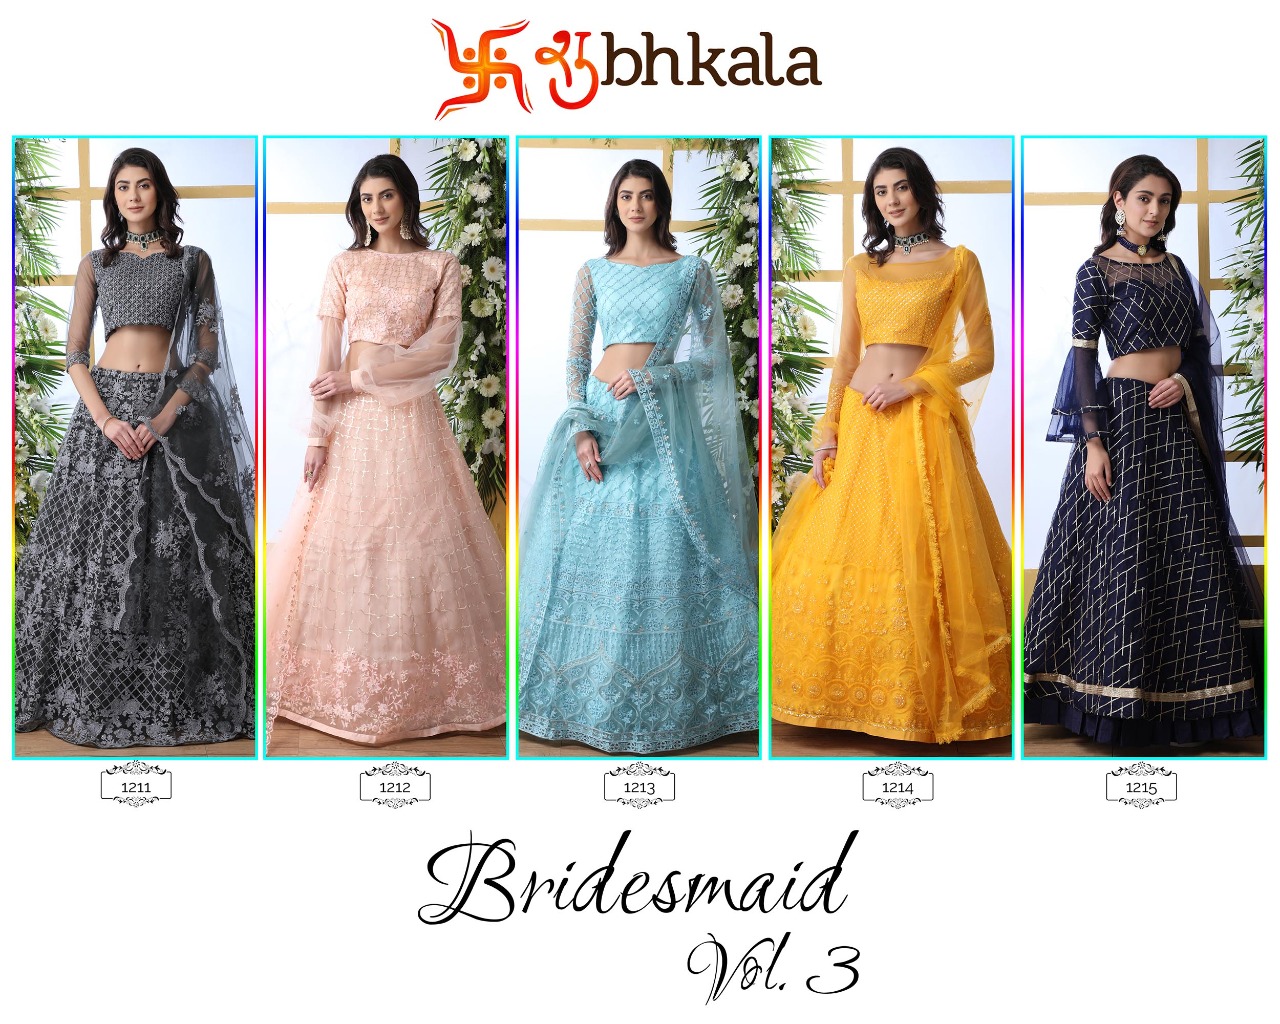 shubhkala  bridesmaid vol 3 net innovative style lehenga choli catalog